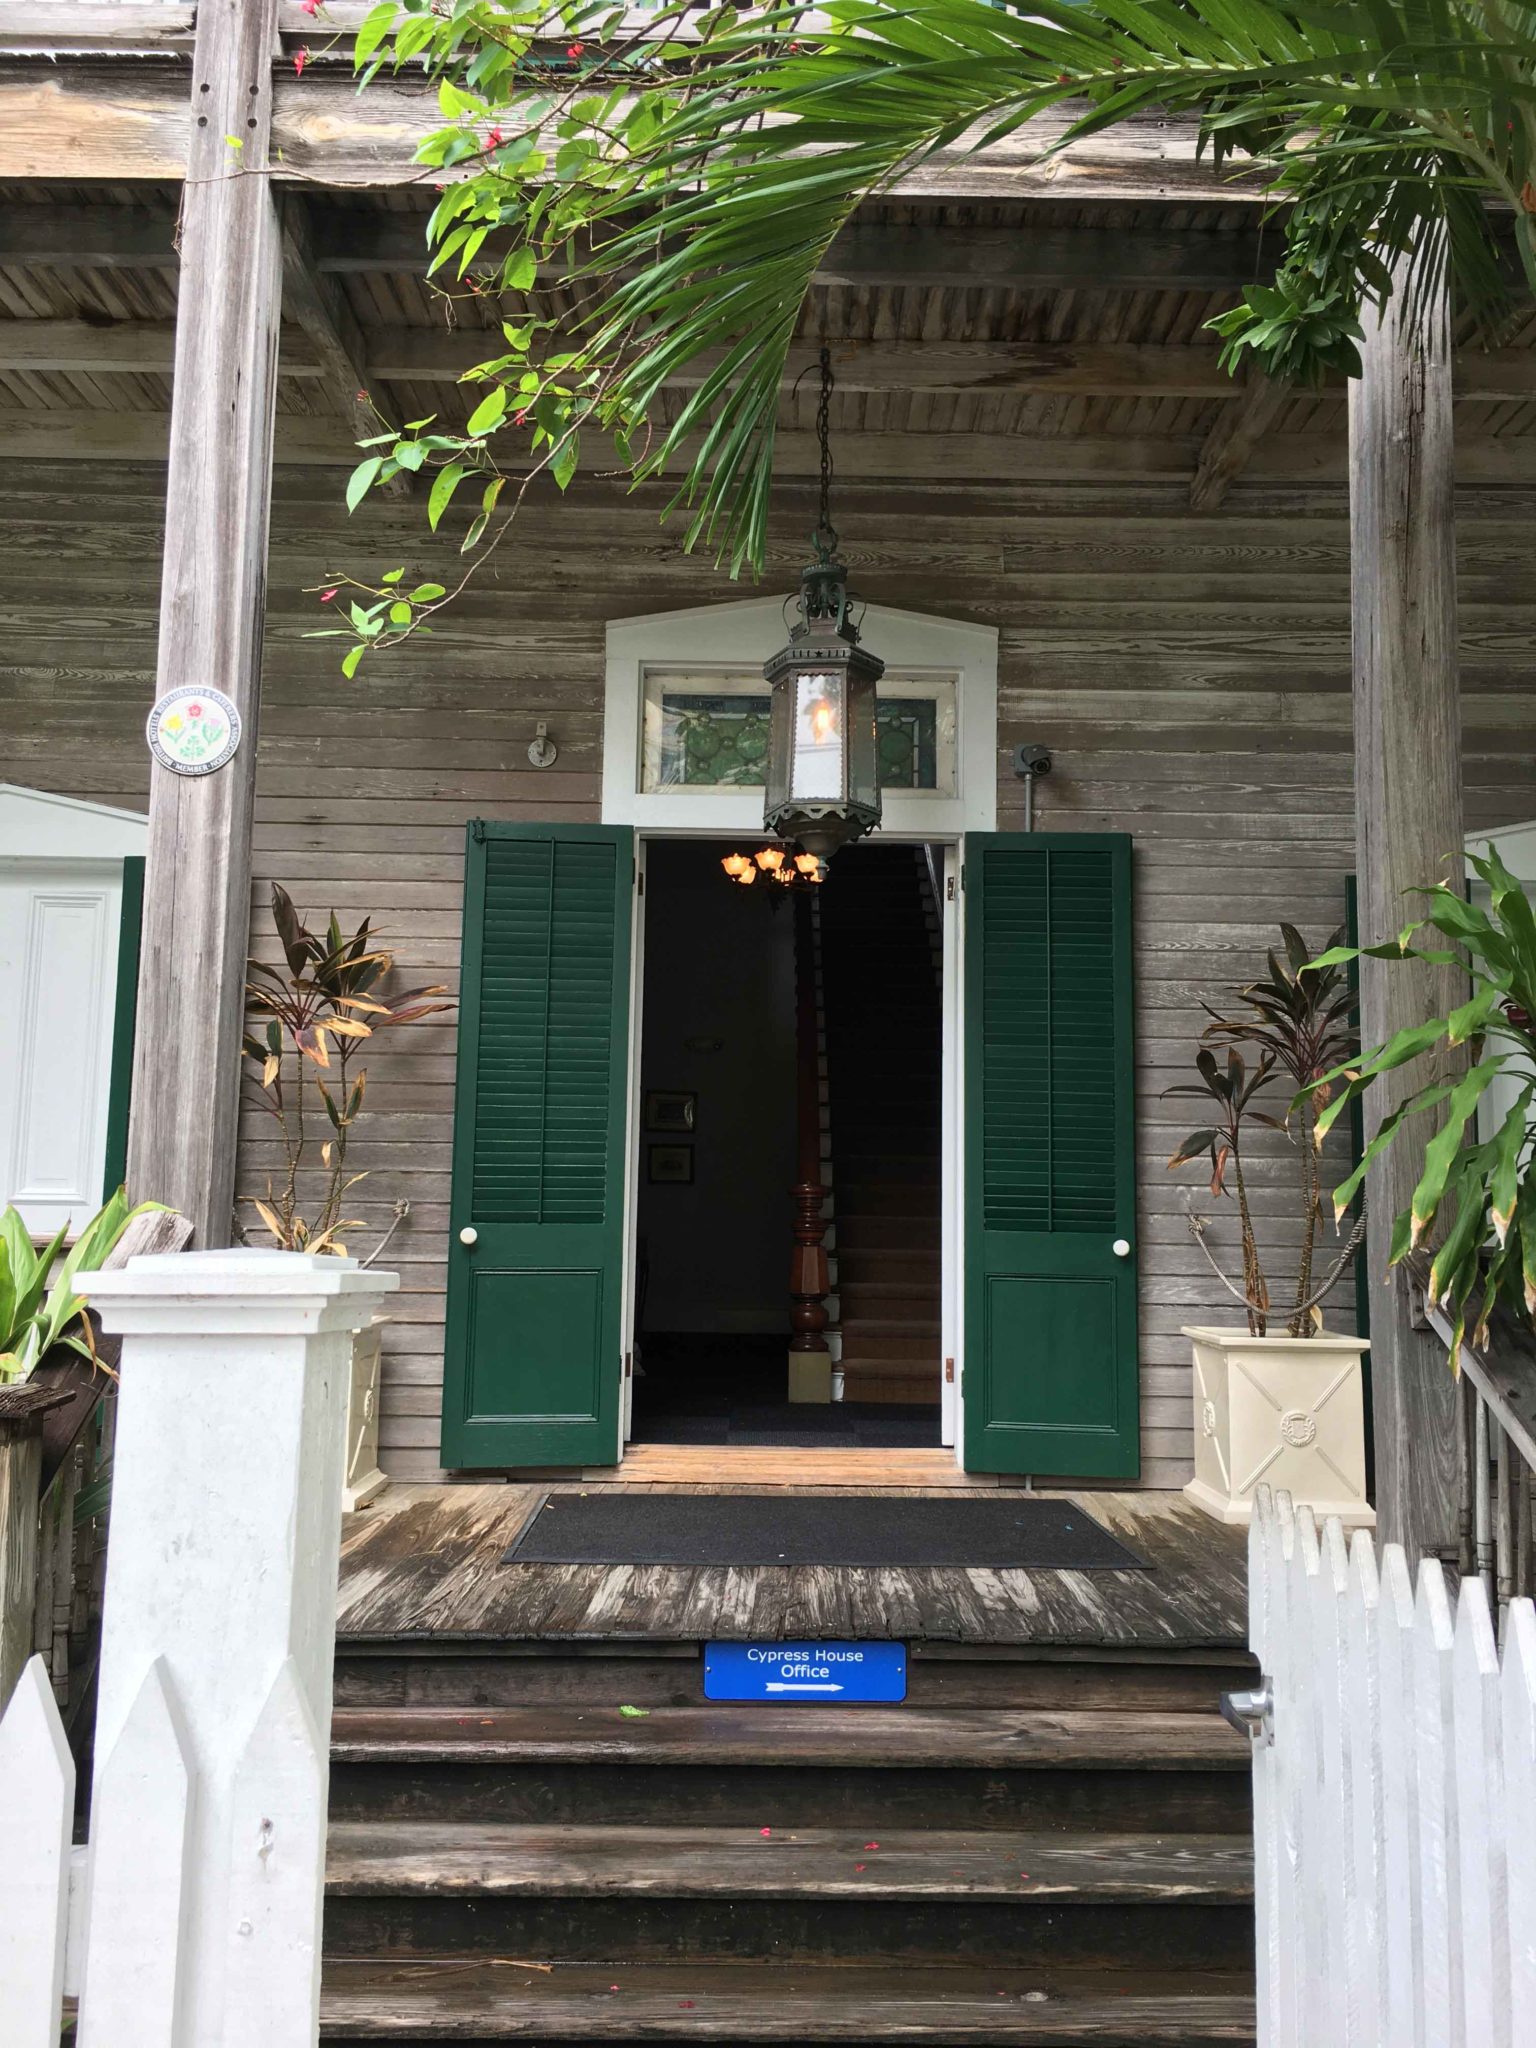 Cypress House – Historic Walking Tour